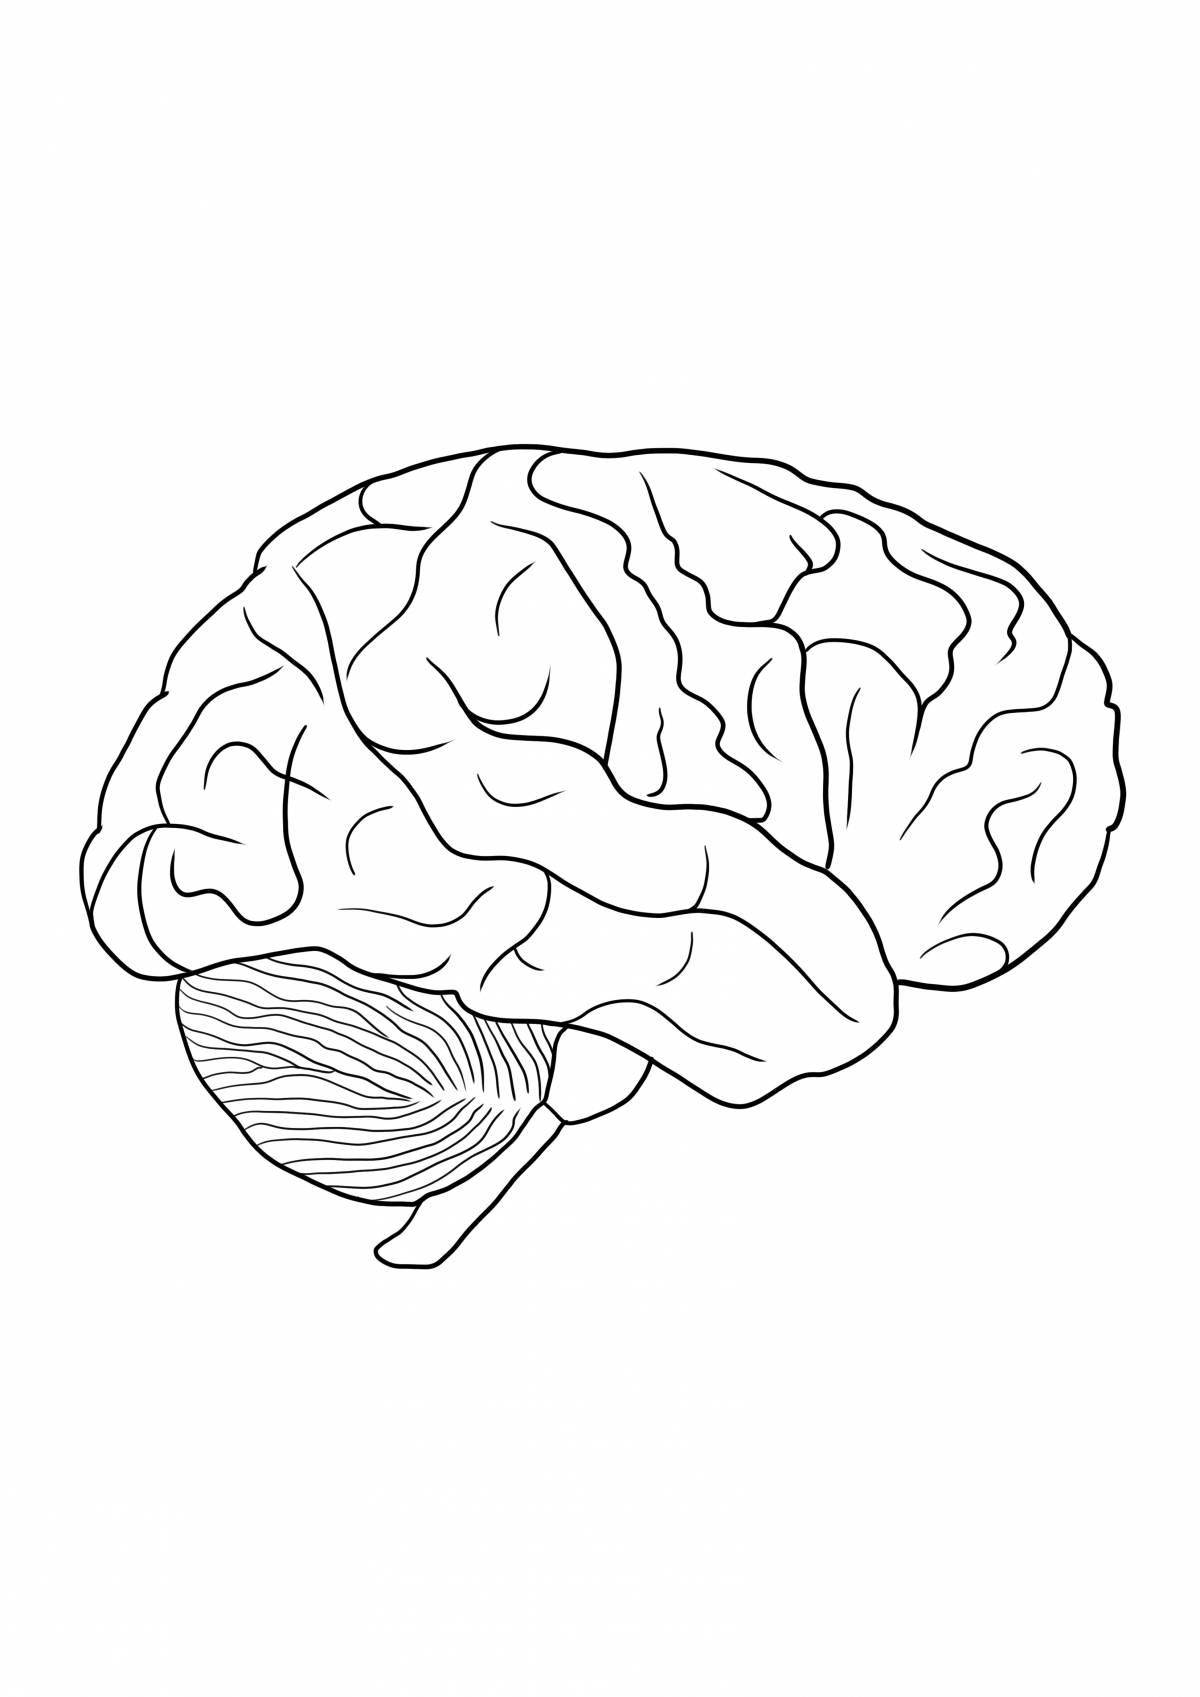 Human brain for kids #16